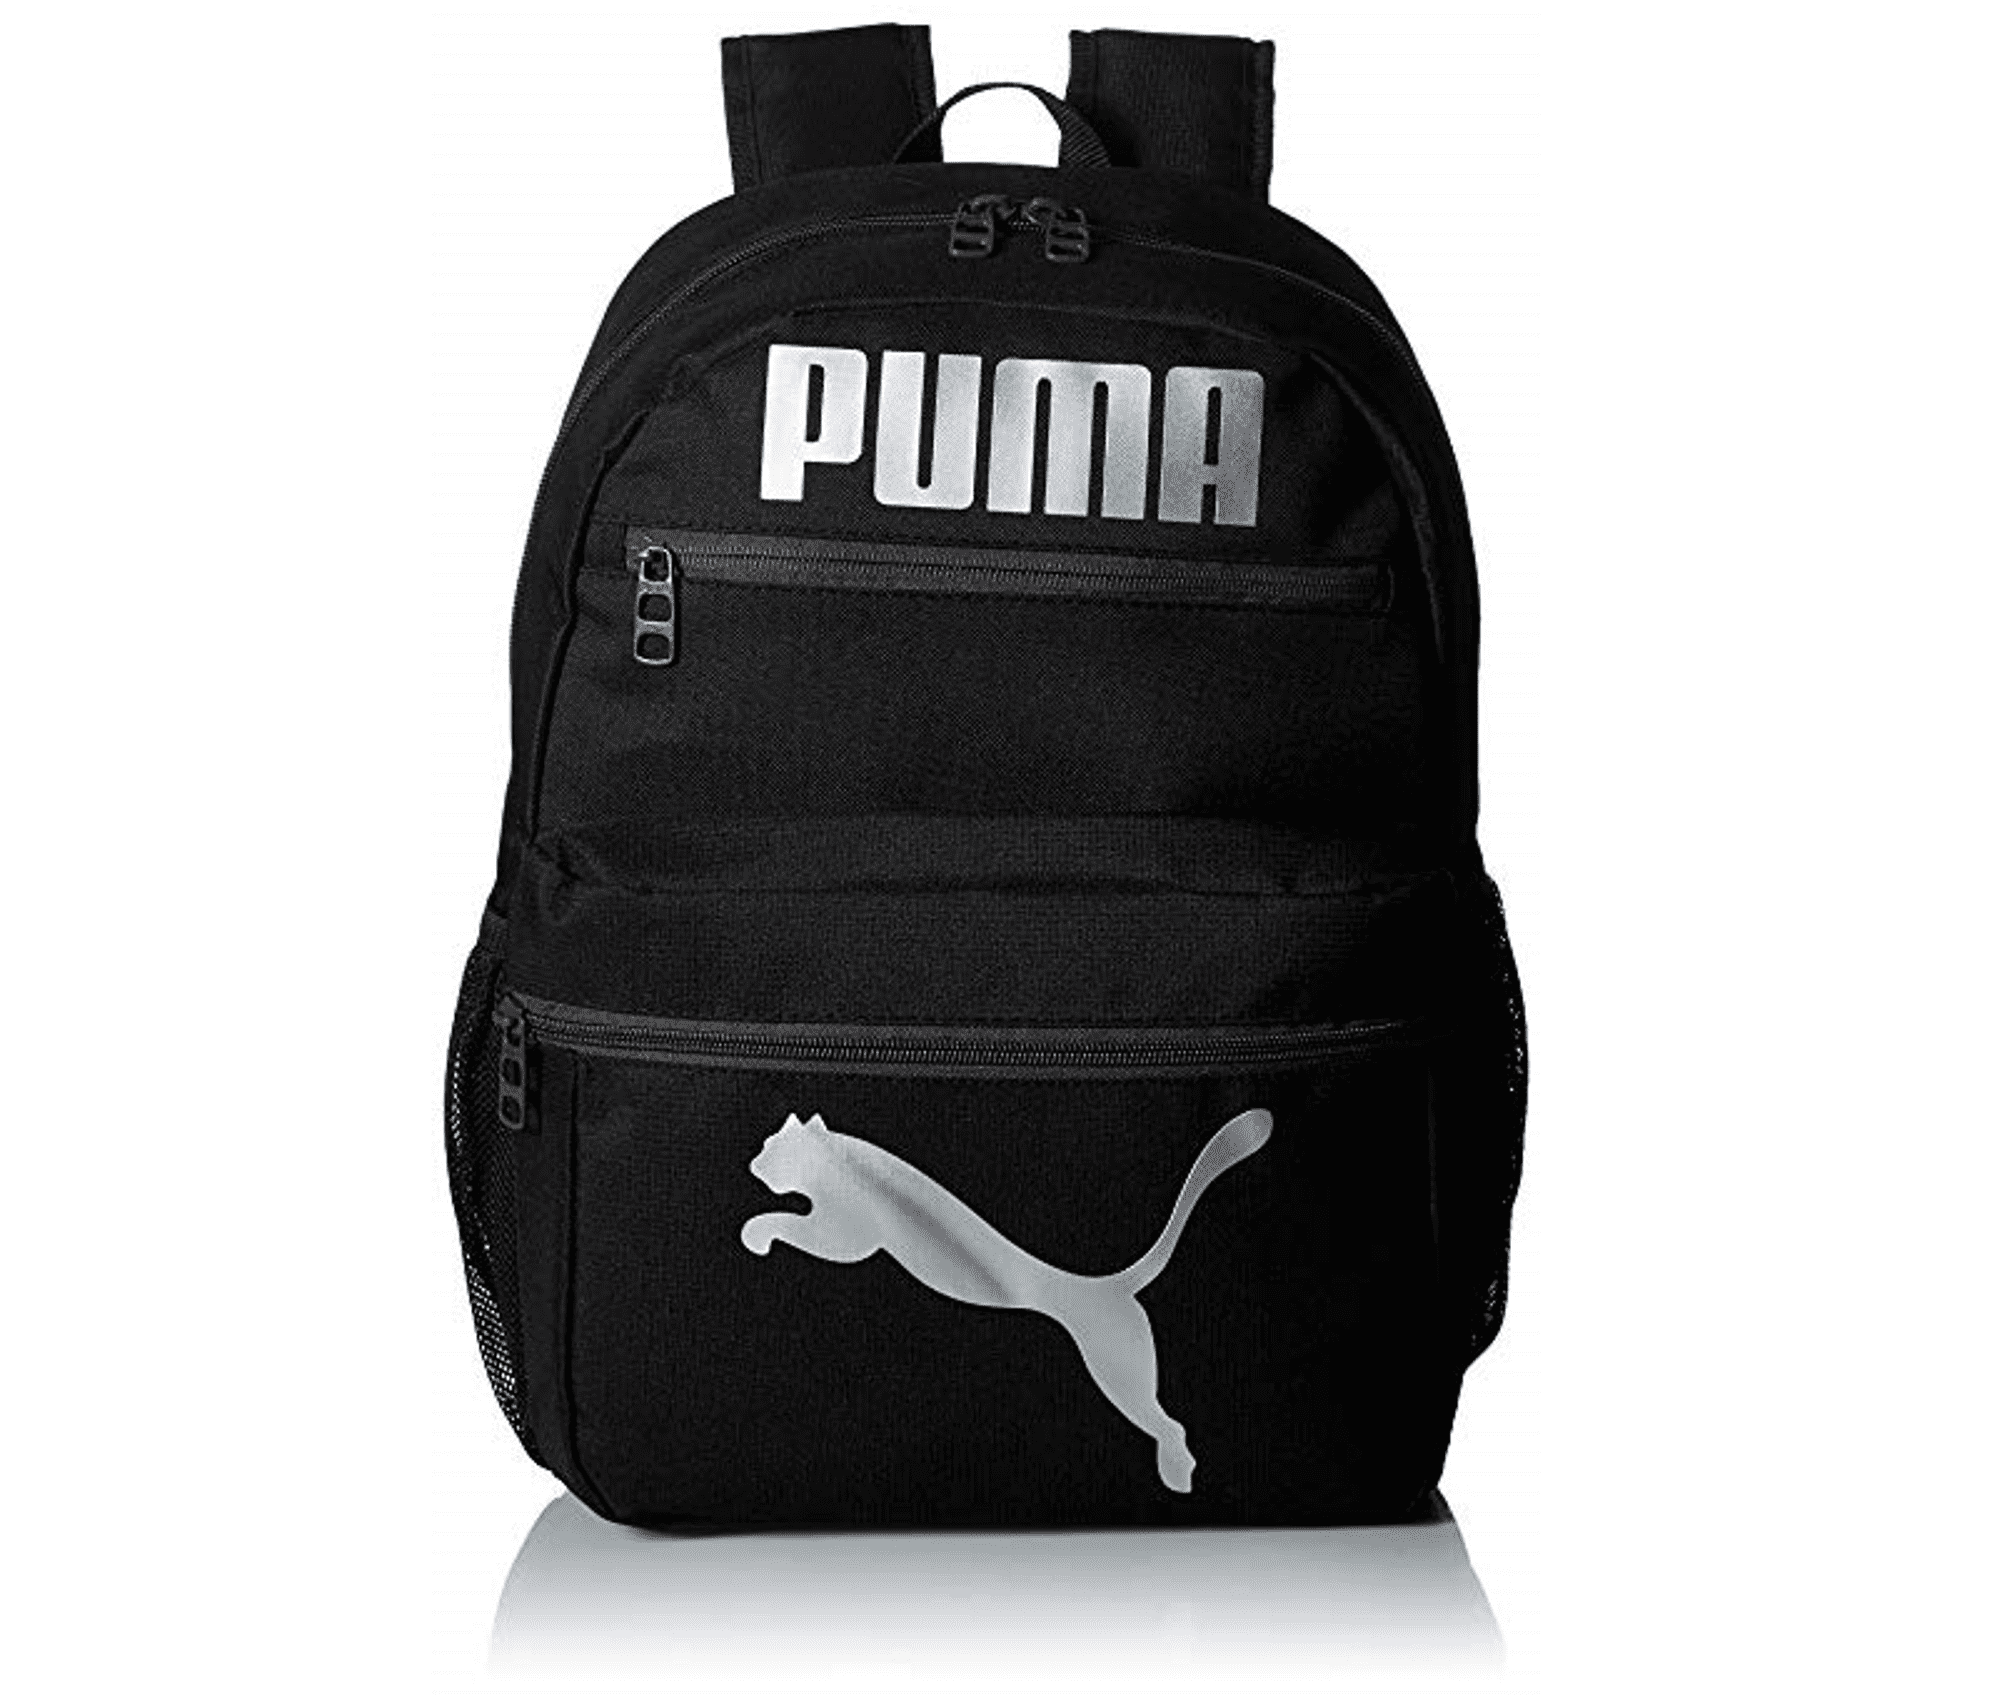 Buy Puma Tropical AOP Women's Black Shoulder Bag online